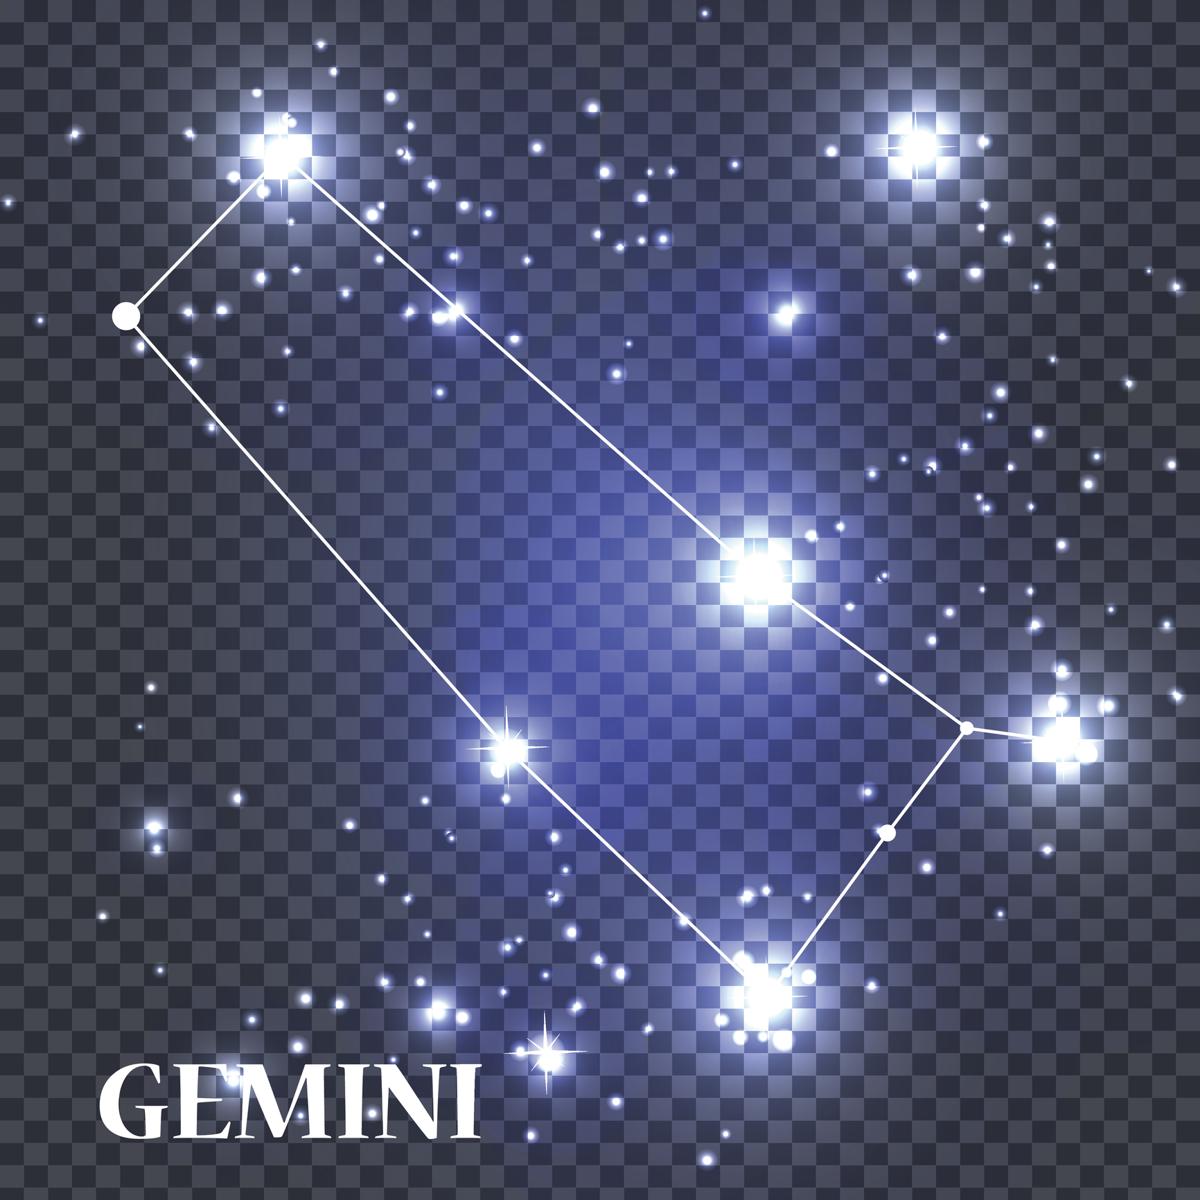 Personality Traits of a Gemini Man - The Way a Gemini Man Thinks